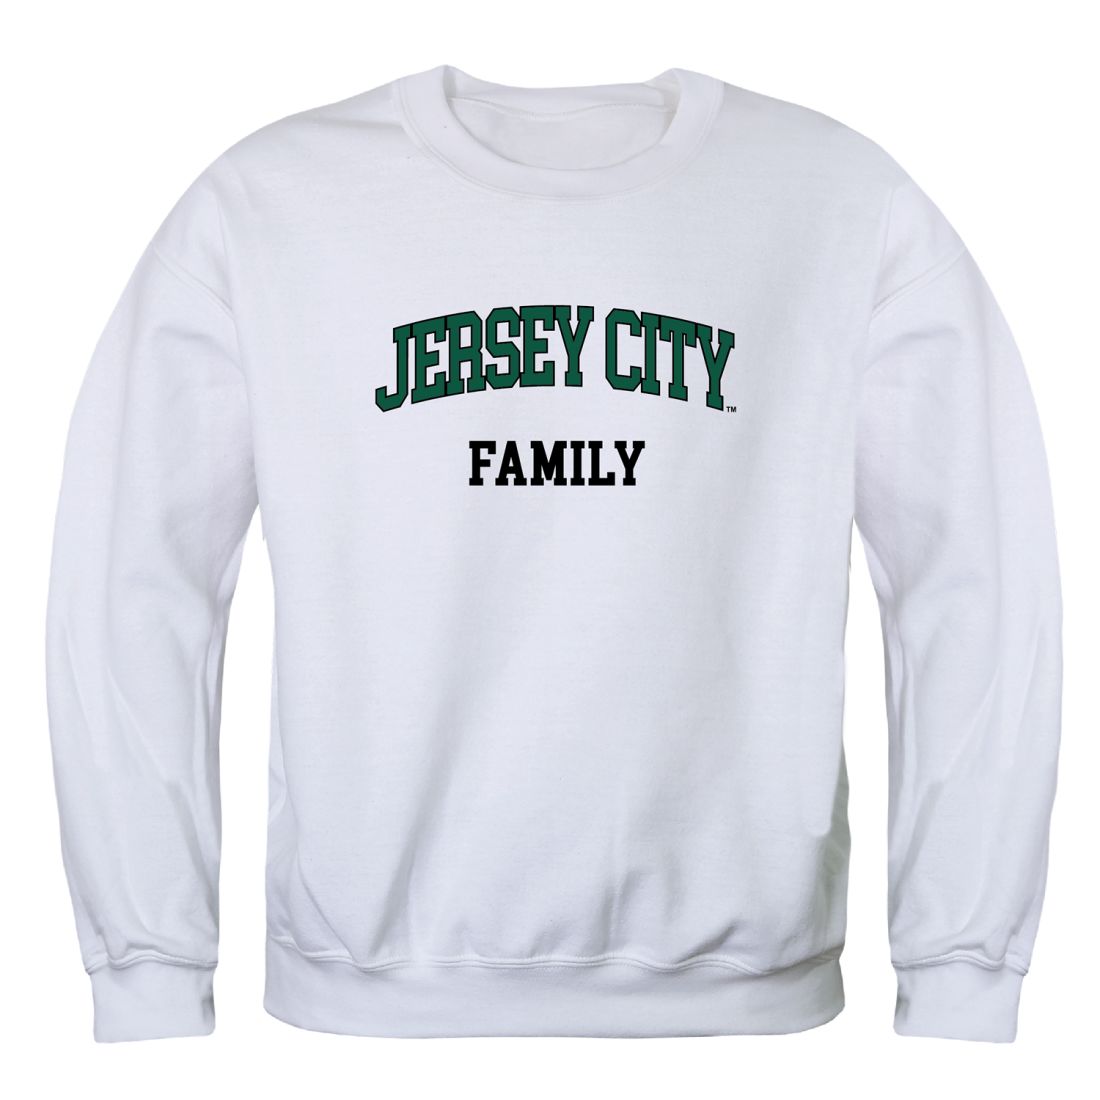 New-Jersey-City-University-Knights-Family-Fleece-Crewneck-Pullover-Sweatshirt